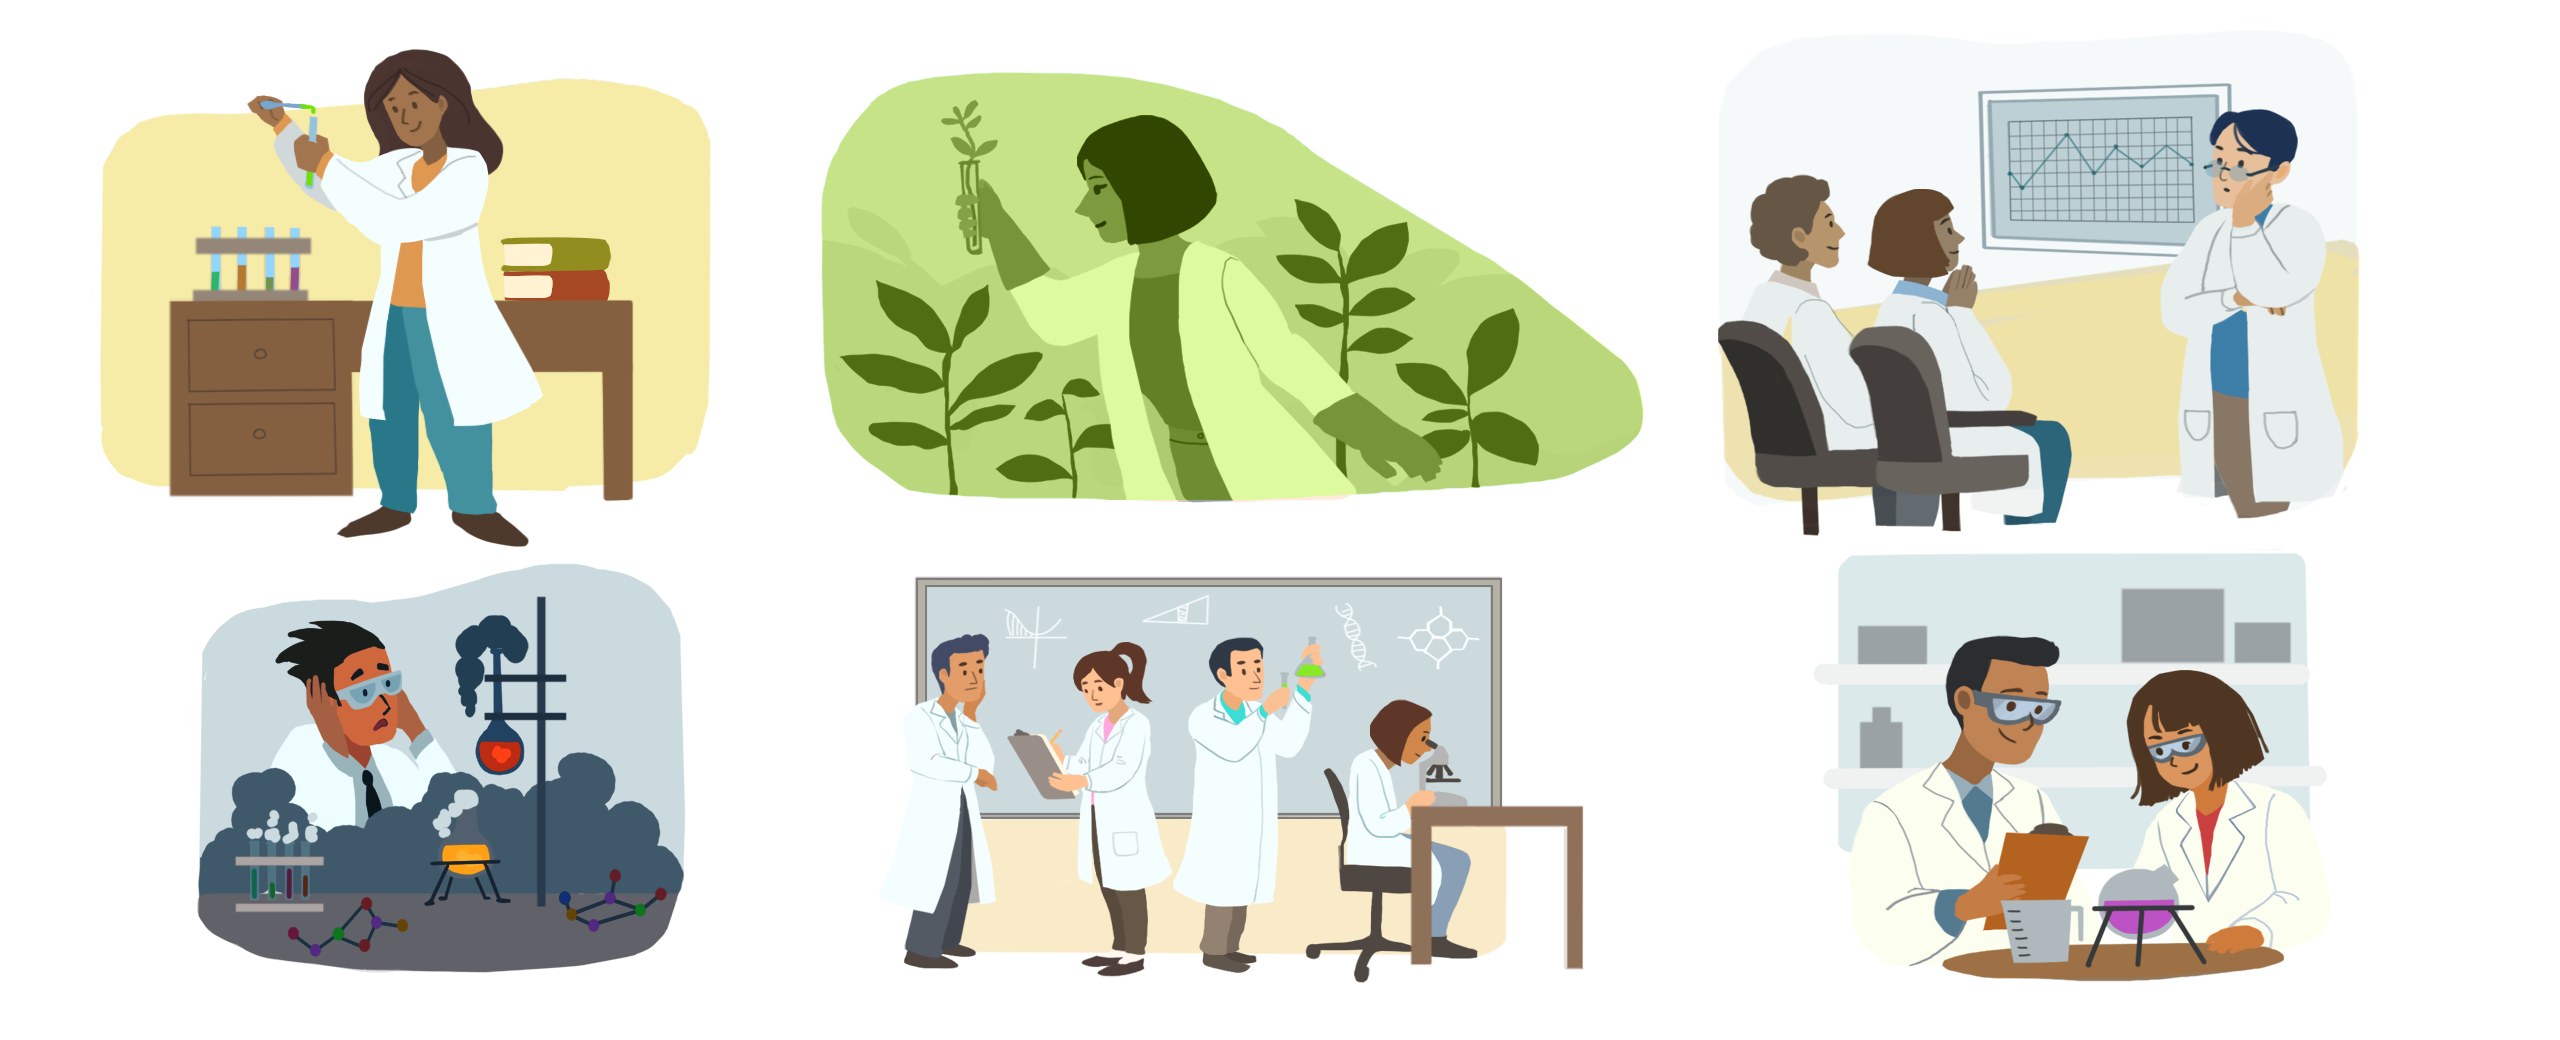 Illustrations of Science Lab